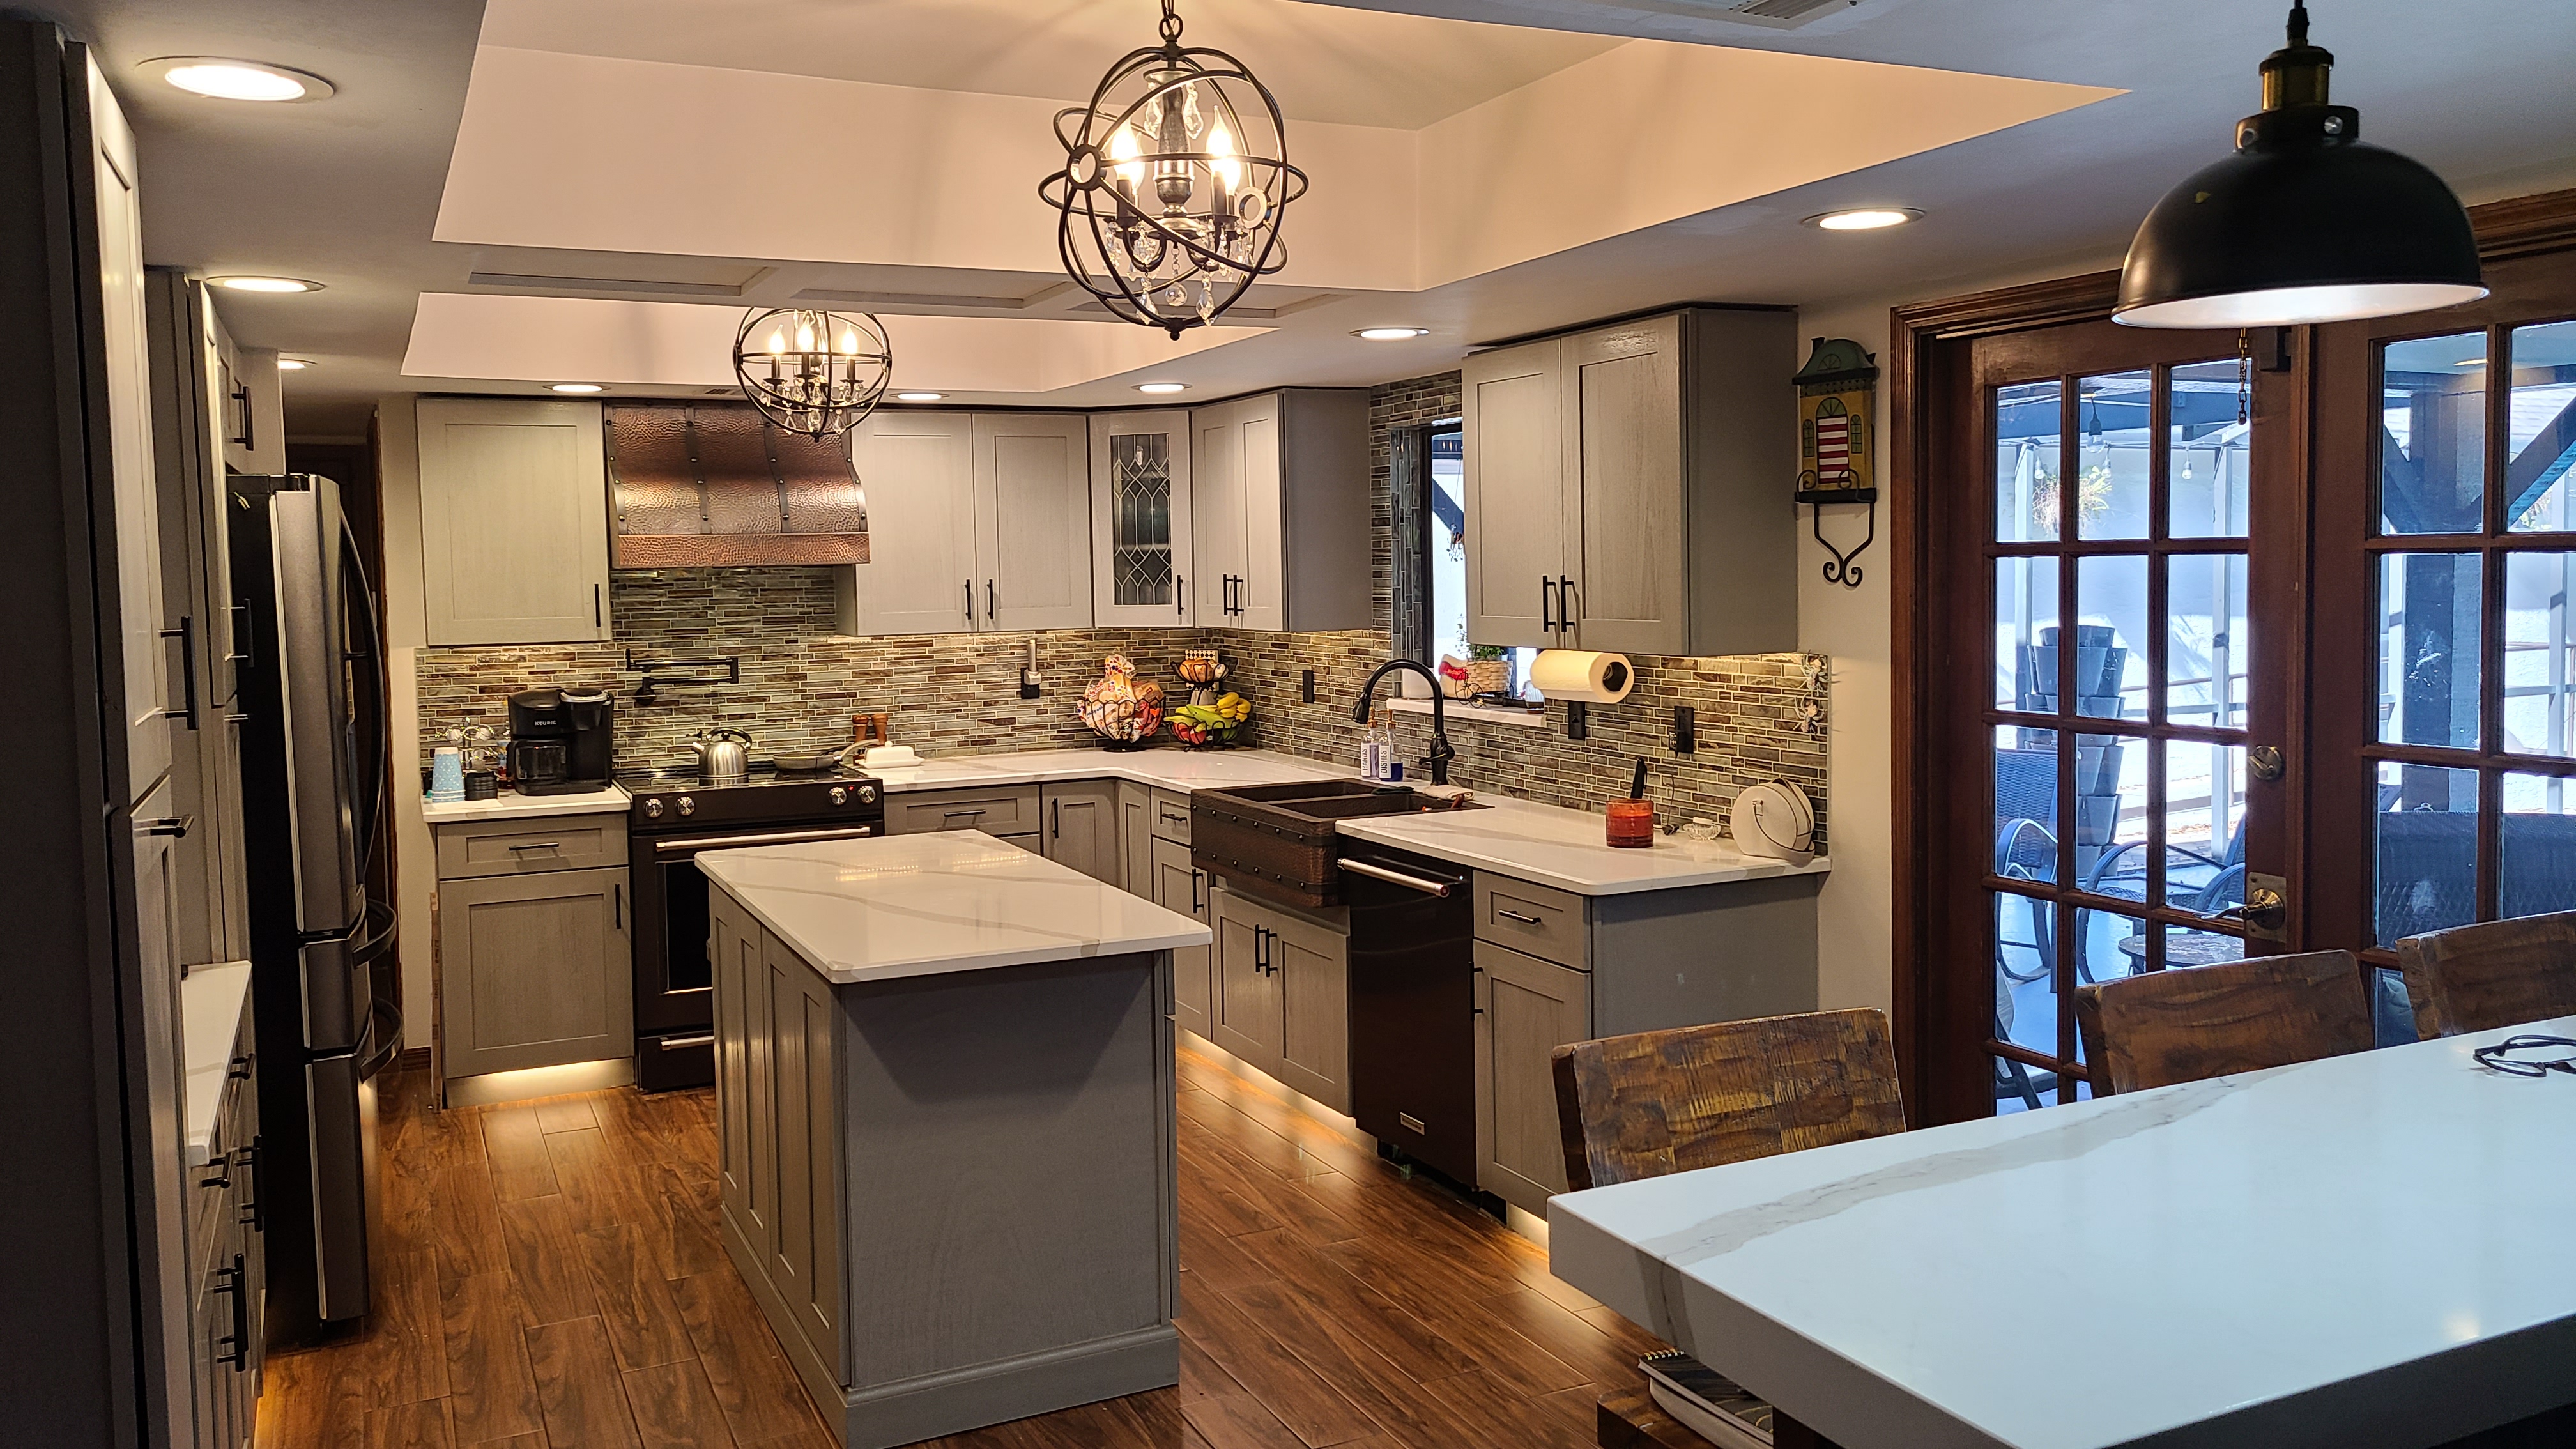 Copper sleek range hood into french-inspired kitchen design with brown kitchen cabinets,white kitchen countertops charming brick backsplash